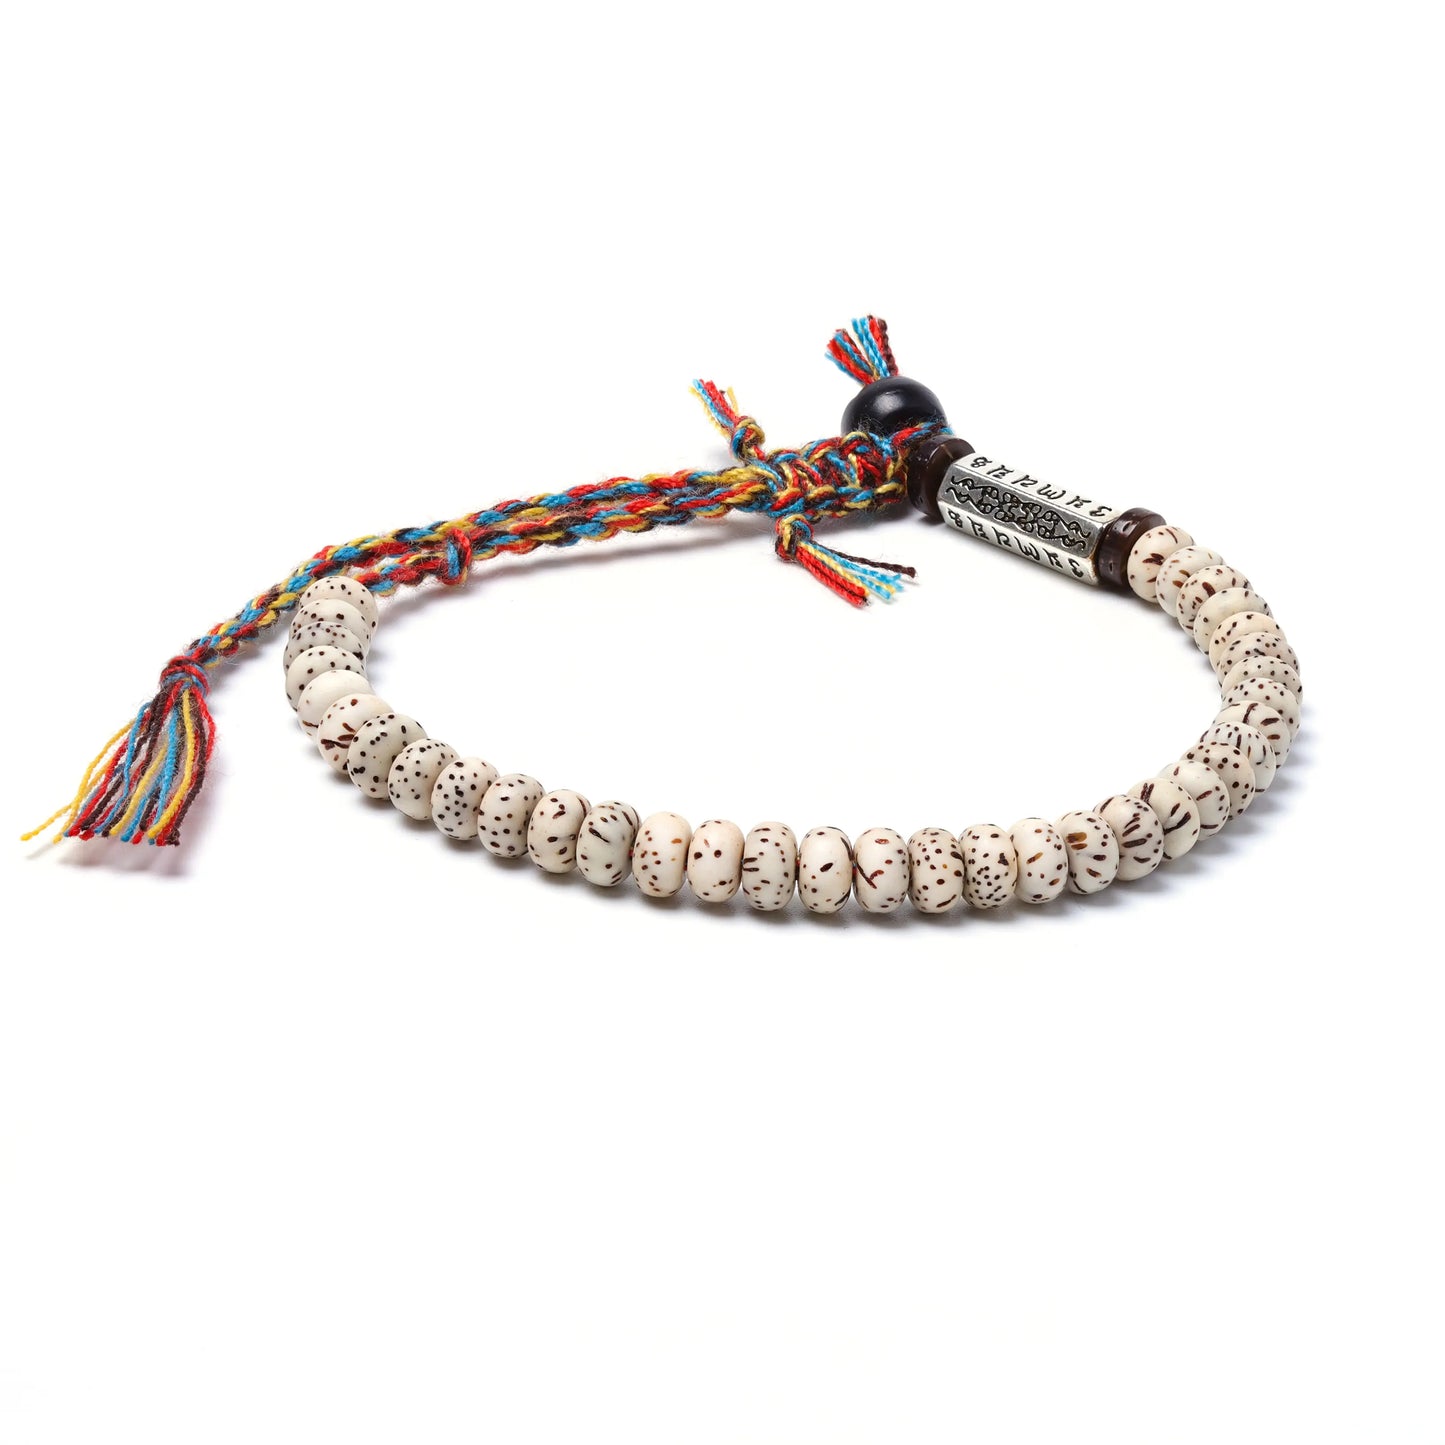 Handmade Tibetan Buddhist bracelet with hand carved bodhi seeds, super thin style